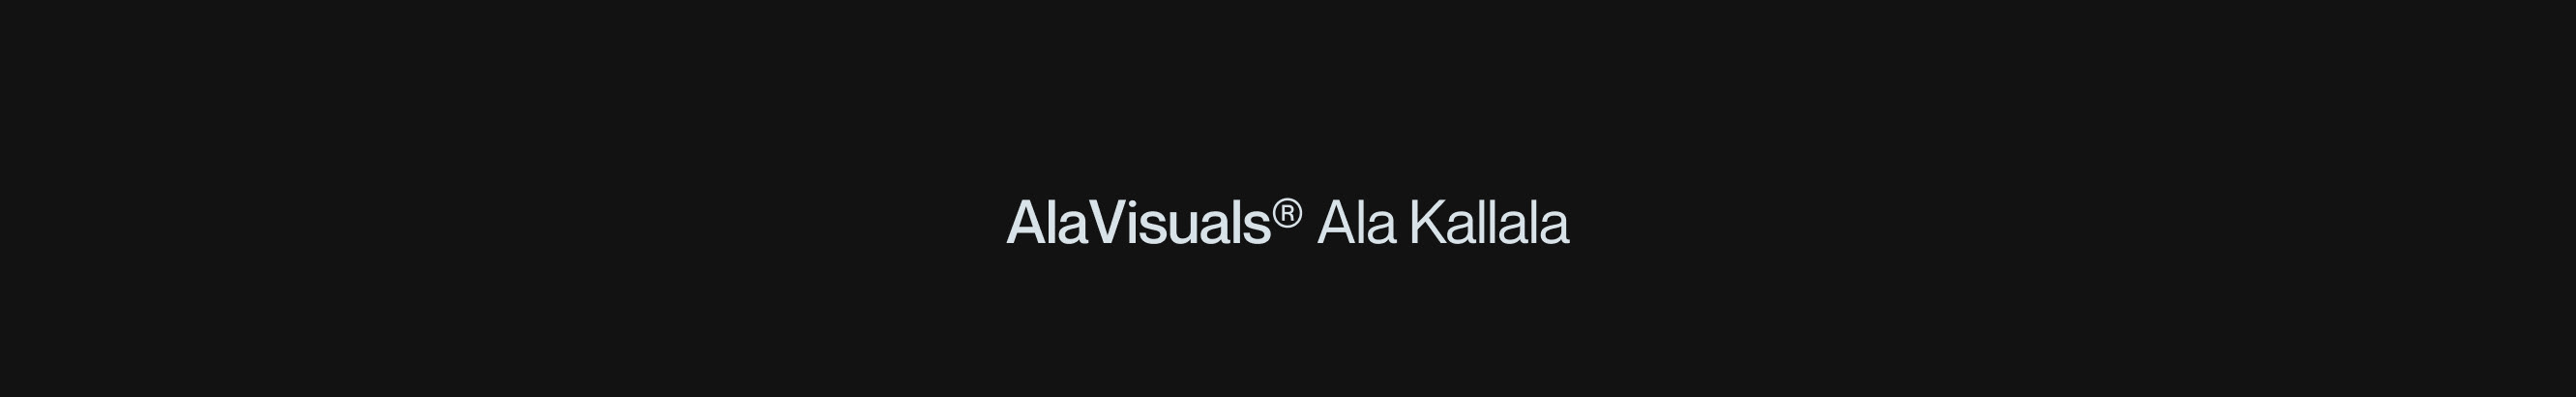 Baner profilu użytkownika Ala Kallala